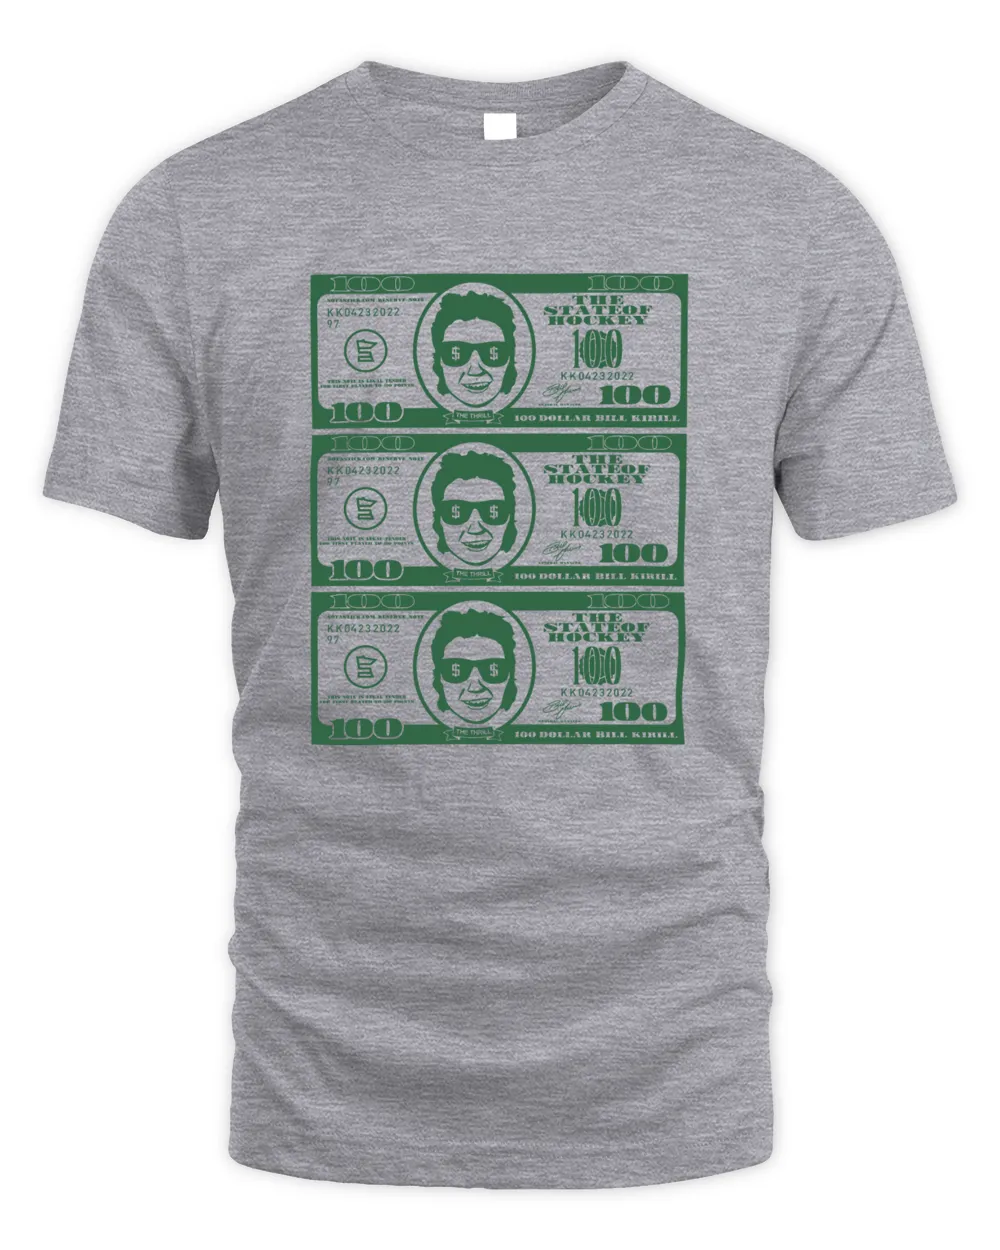 $100 Bill Kirill Shirt Ryan Hartman